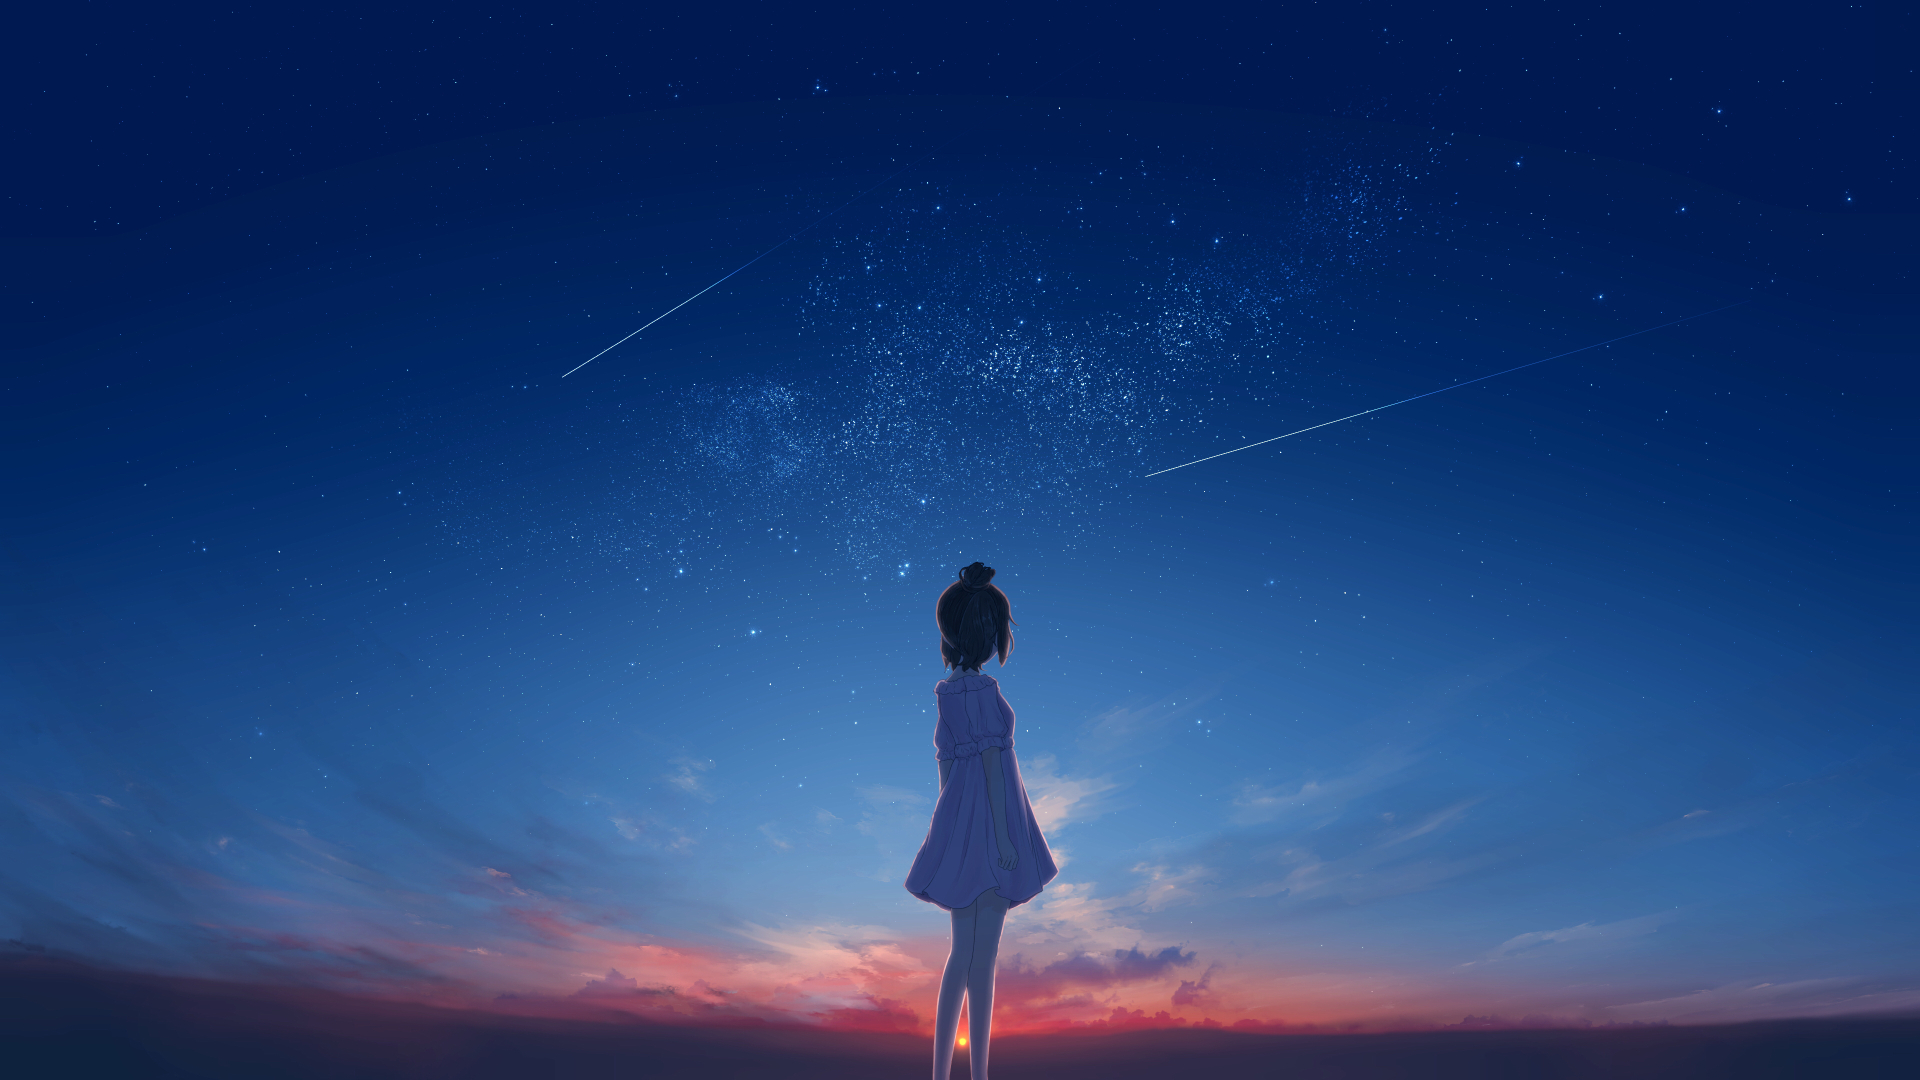 Alone Anime Boy Scenery 4K wallpaper download